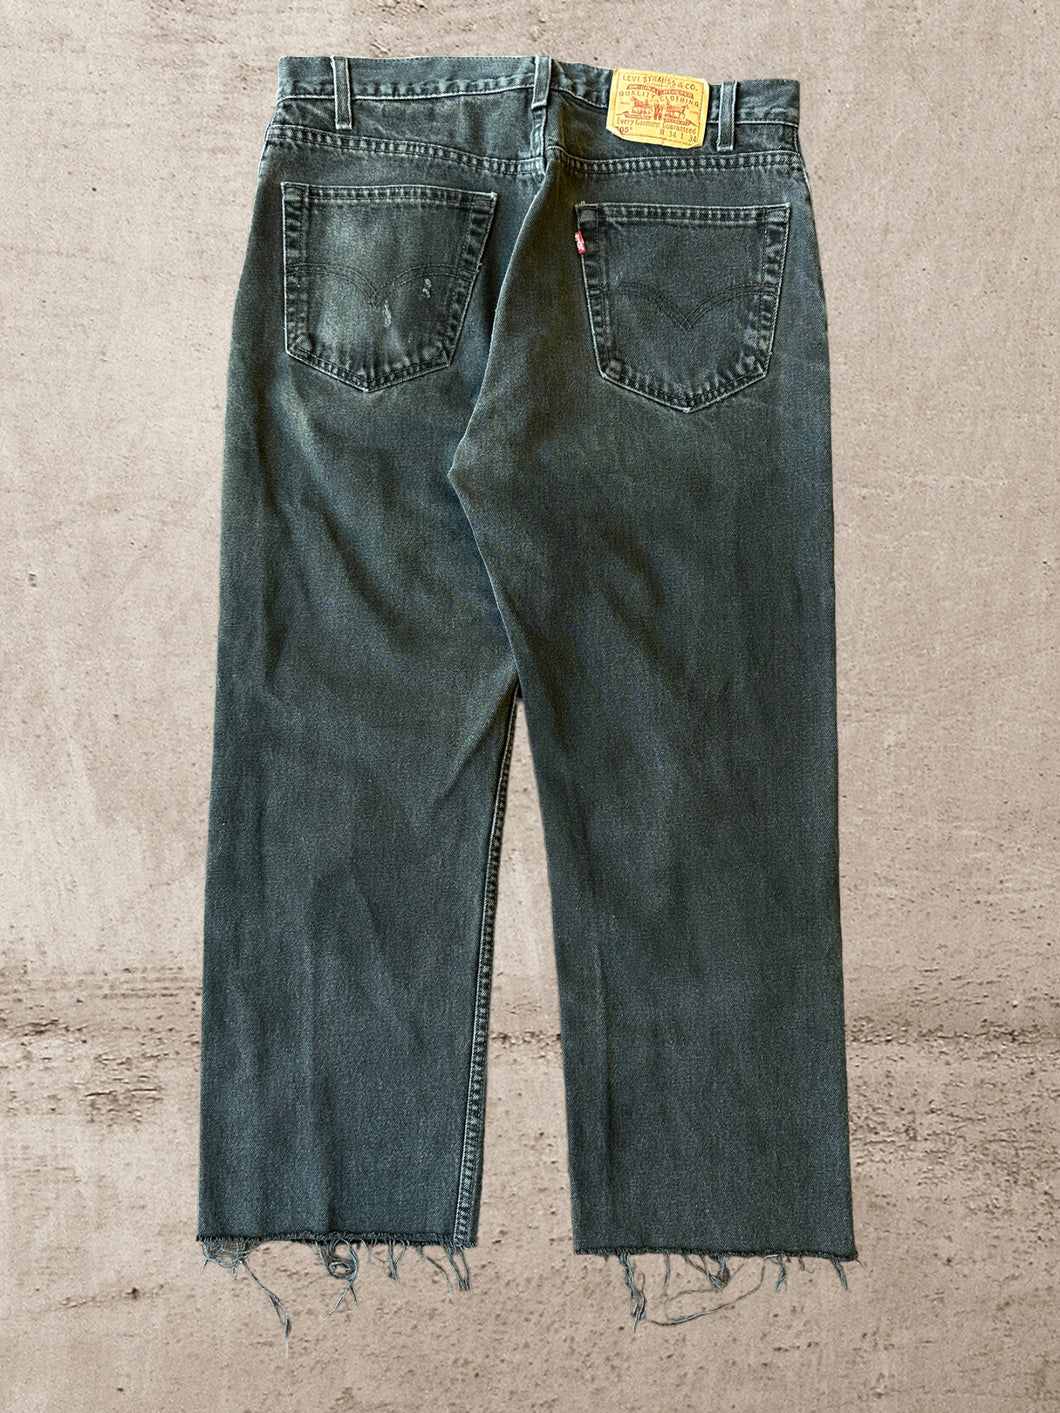 90s Levi 505 Black Cropped Jeans - 34x26